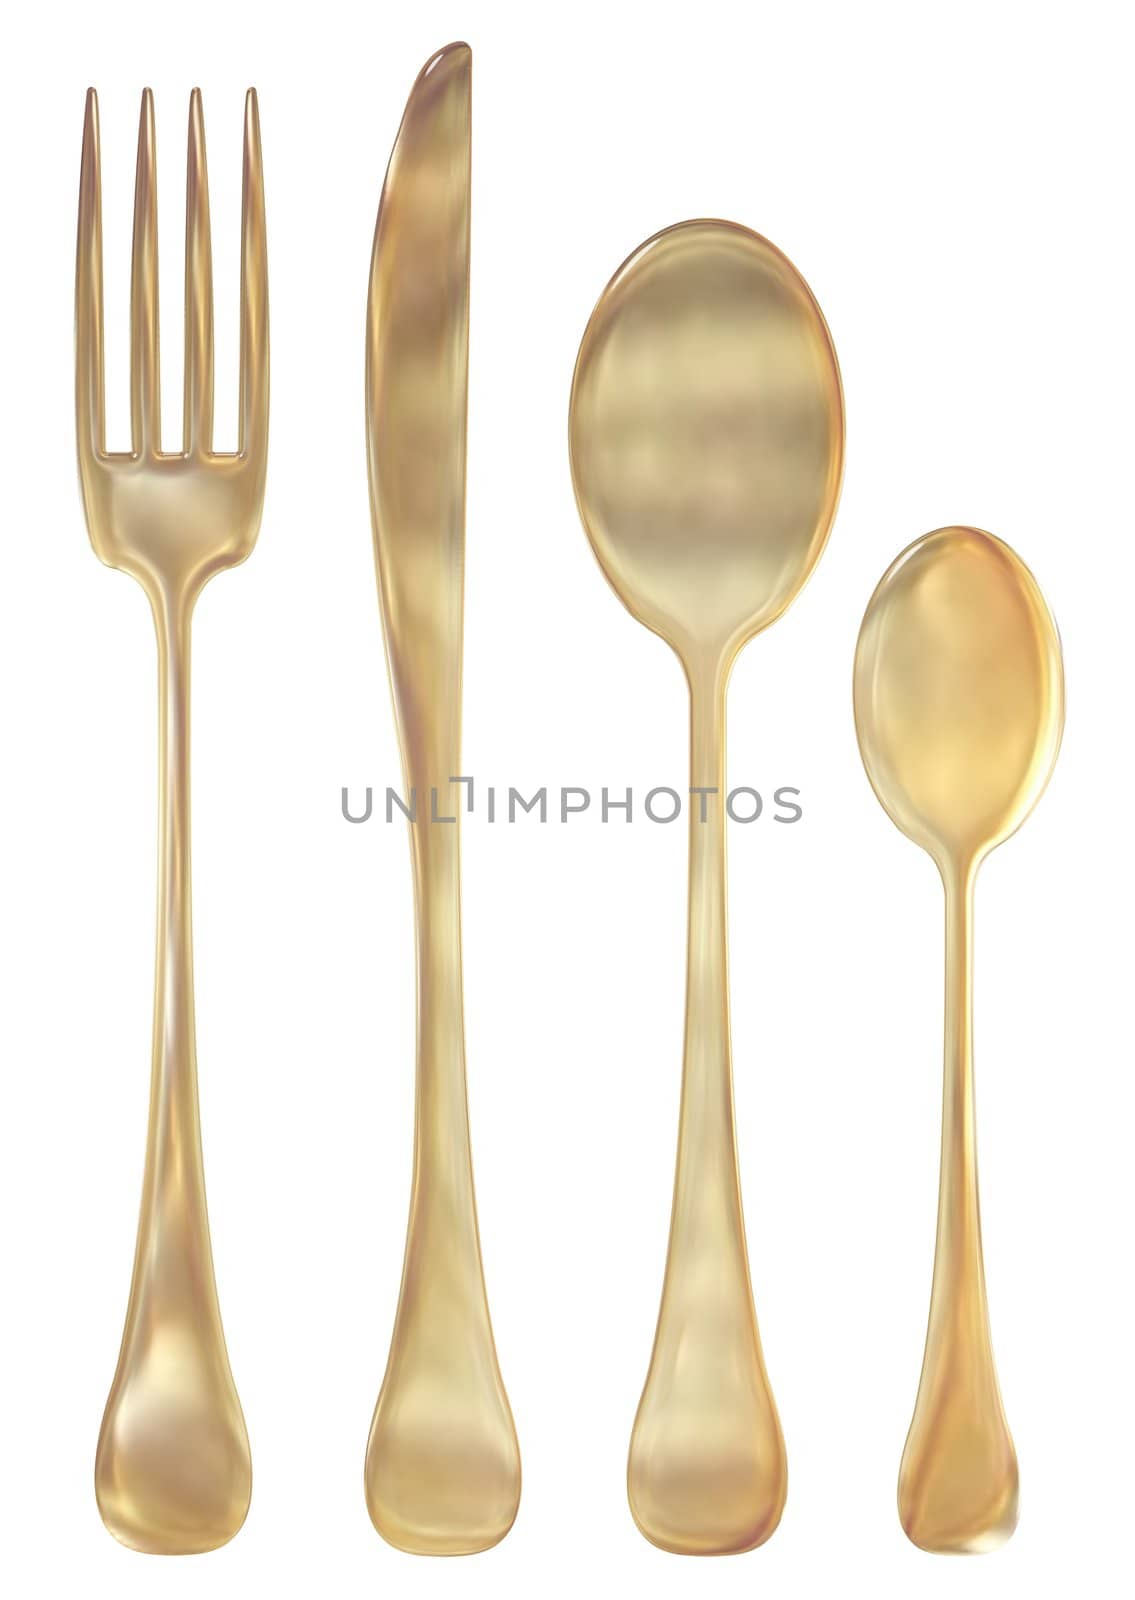 Illustration of a set of golden cutlery